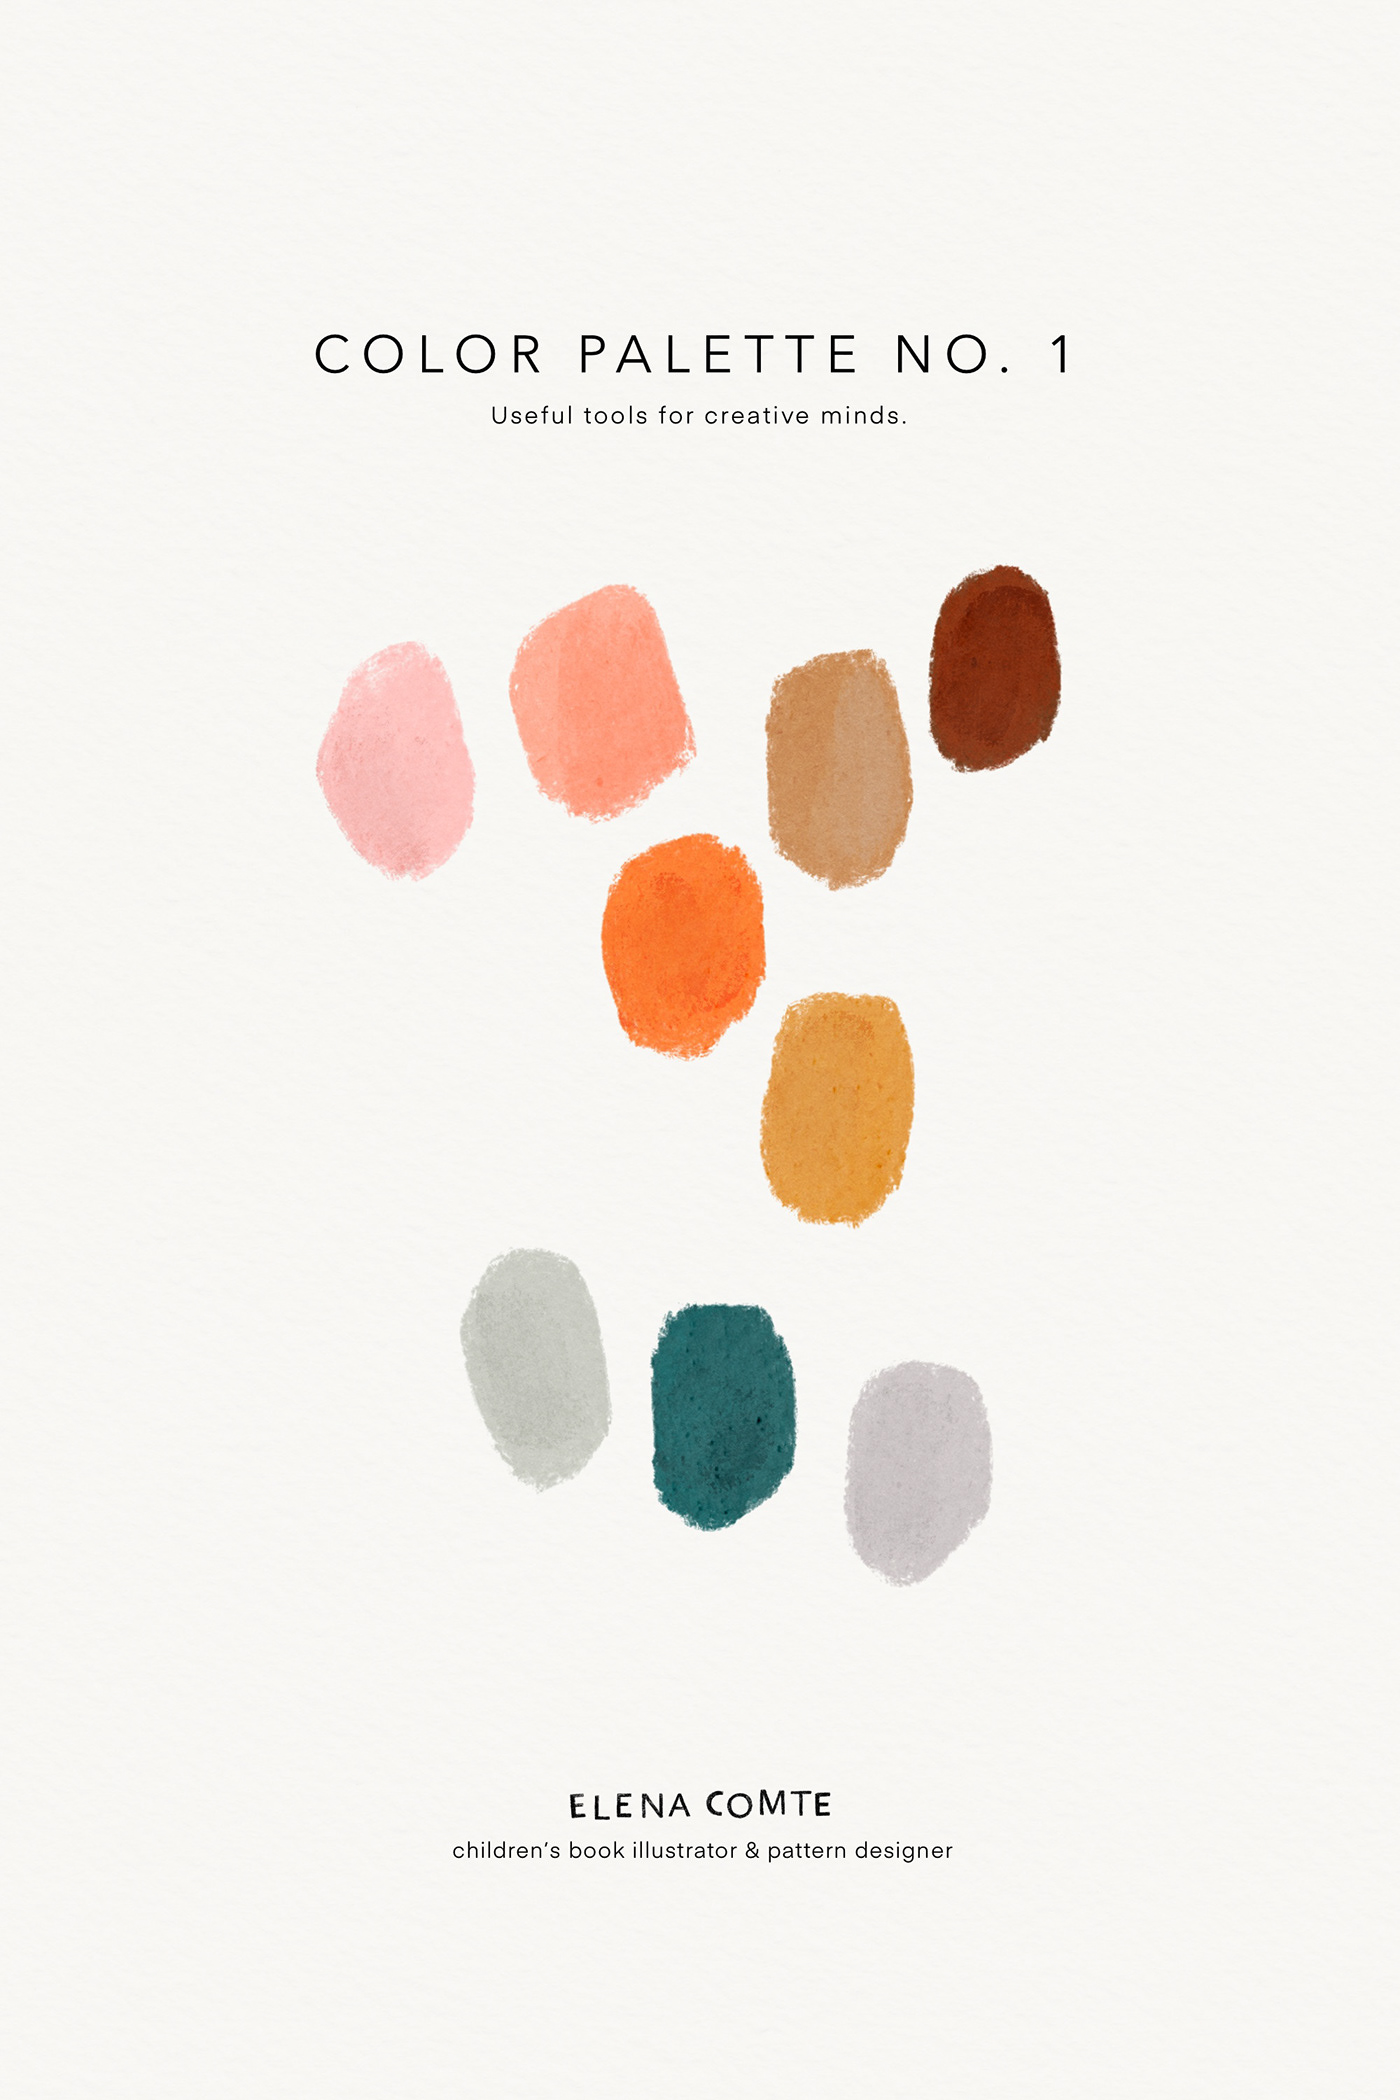 Color palette cards created by children's book illustrator and designer Elena Comte.